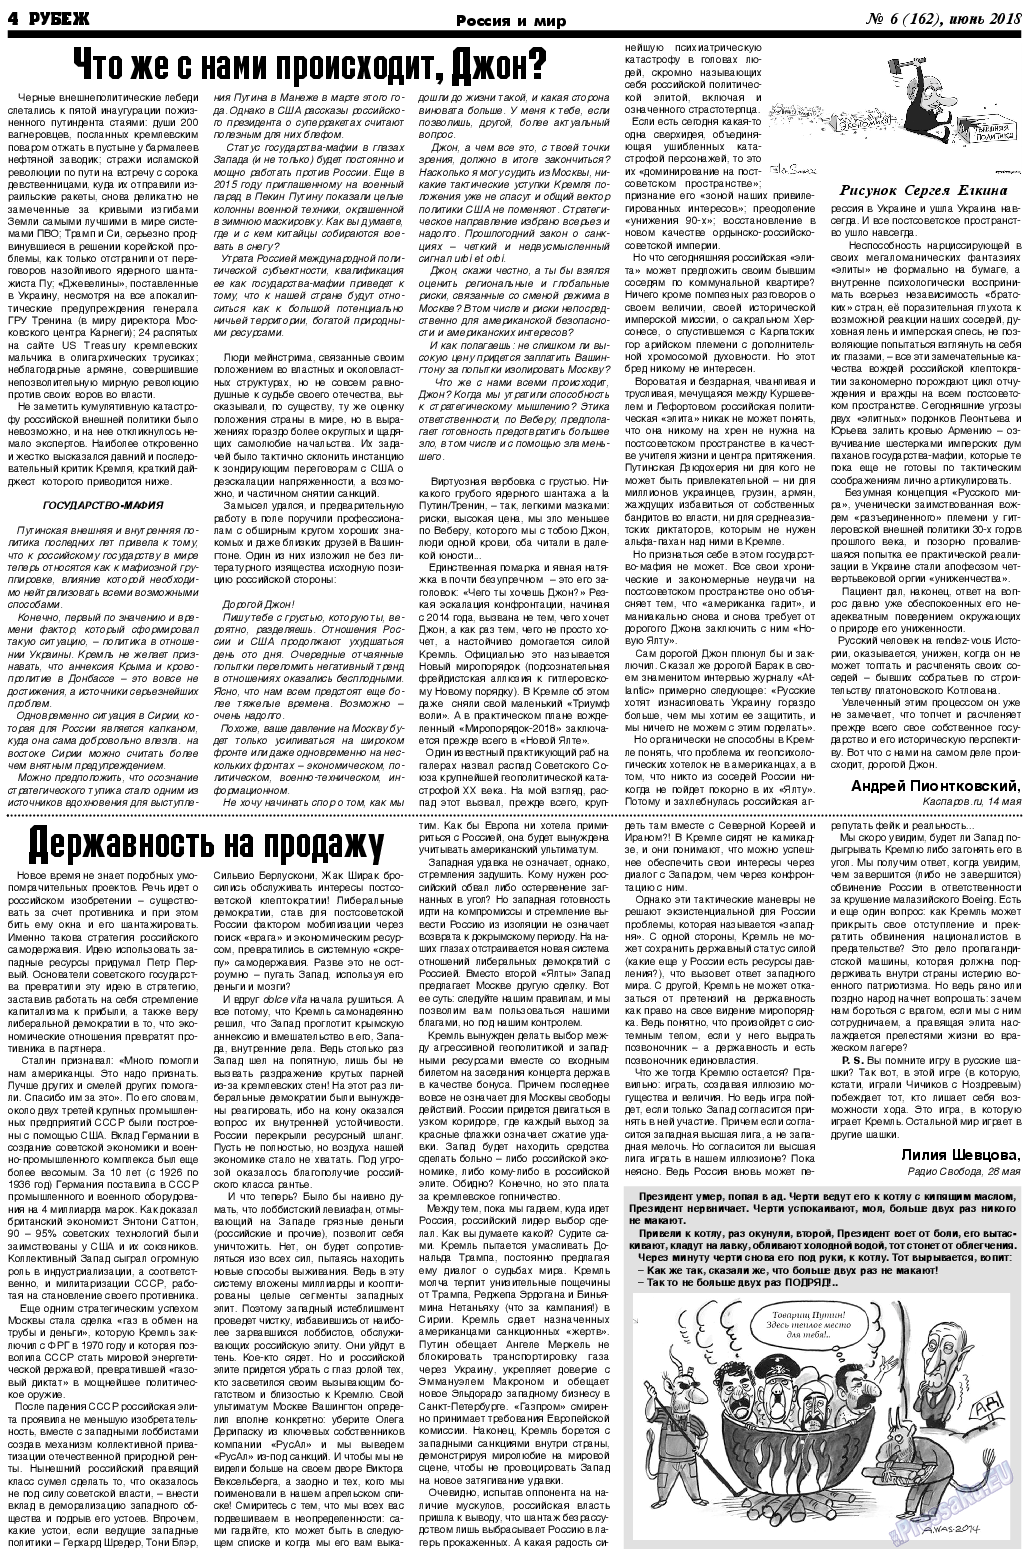 Рубеж, газета. 2018 №6 стр.4